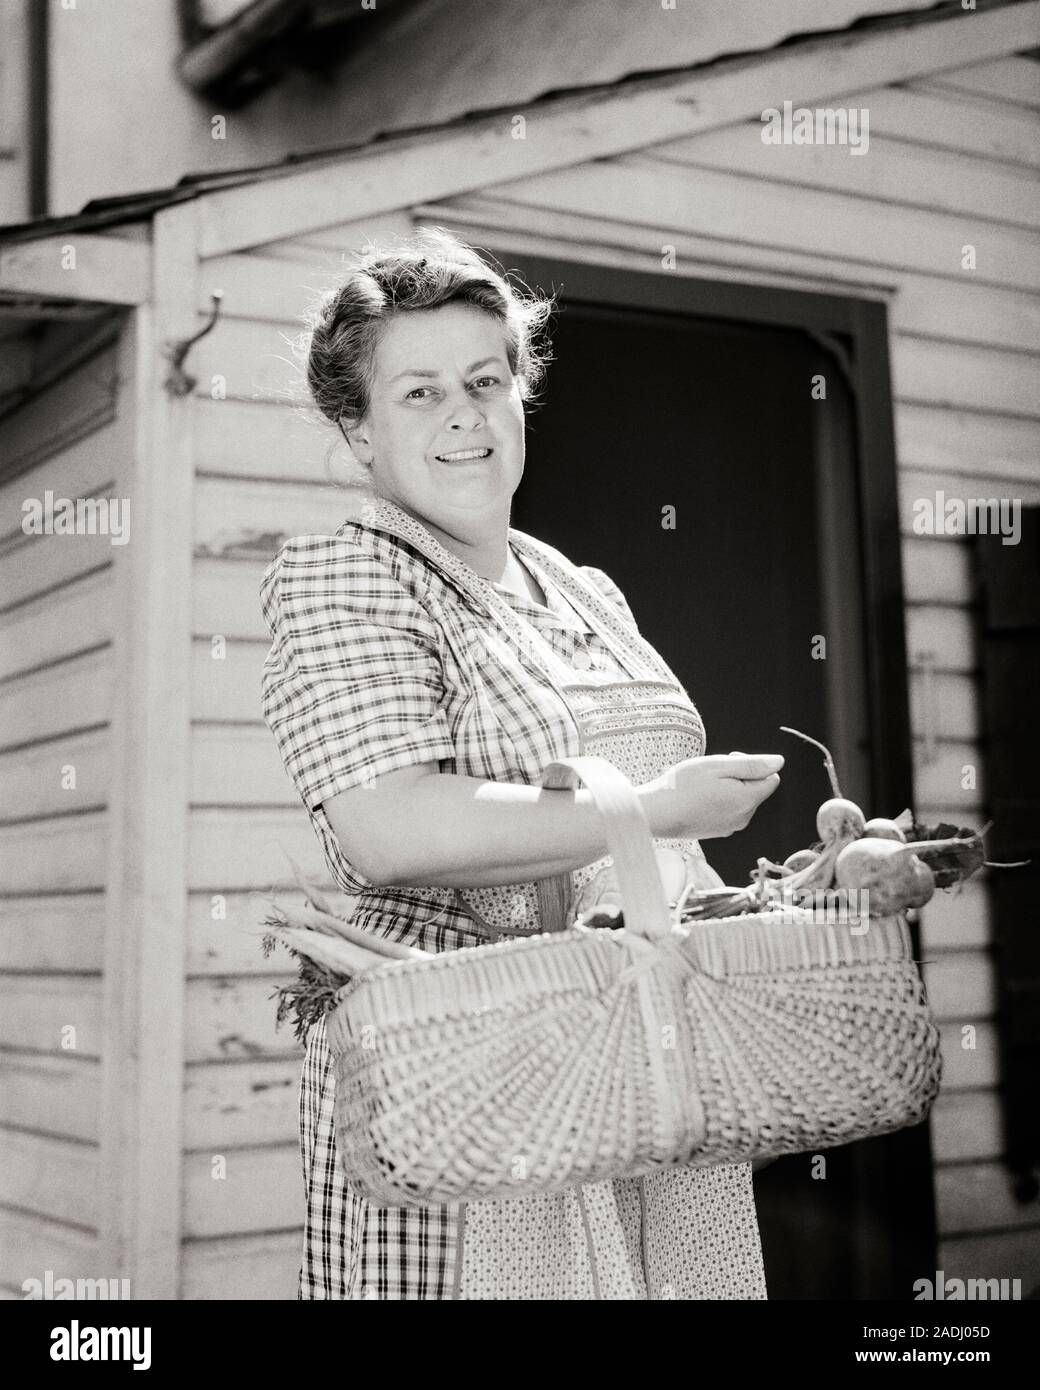 Catalog Sunday  1940s women, Farm clothes, 1940s fashion